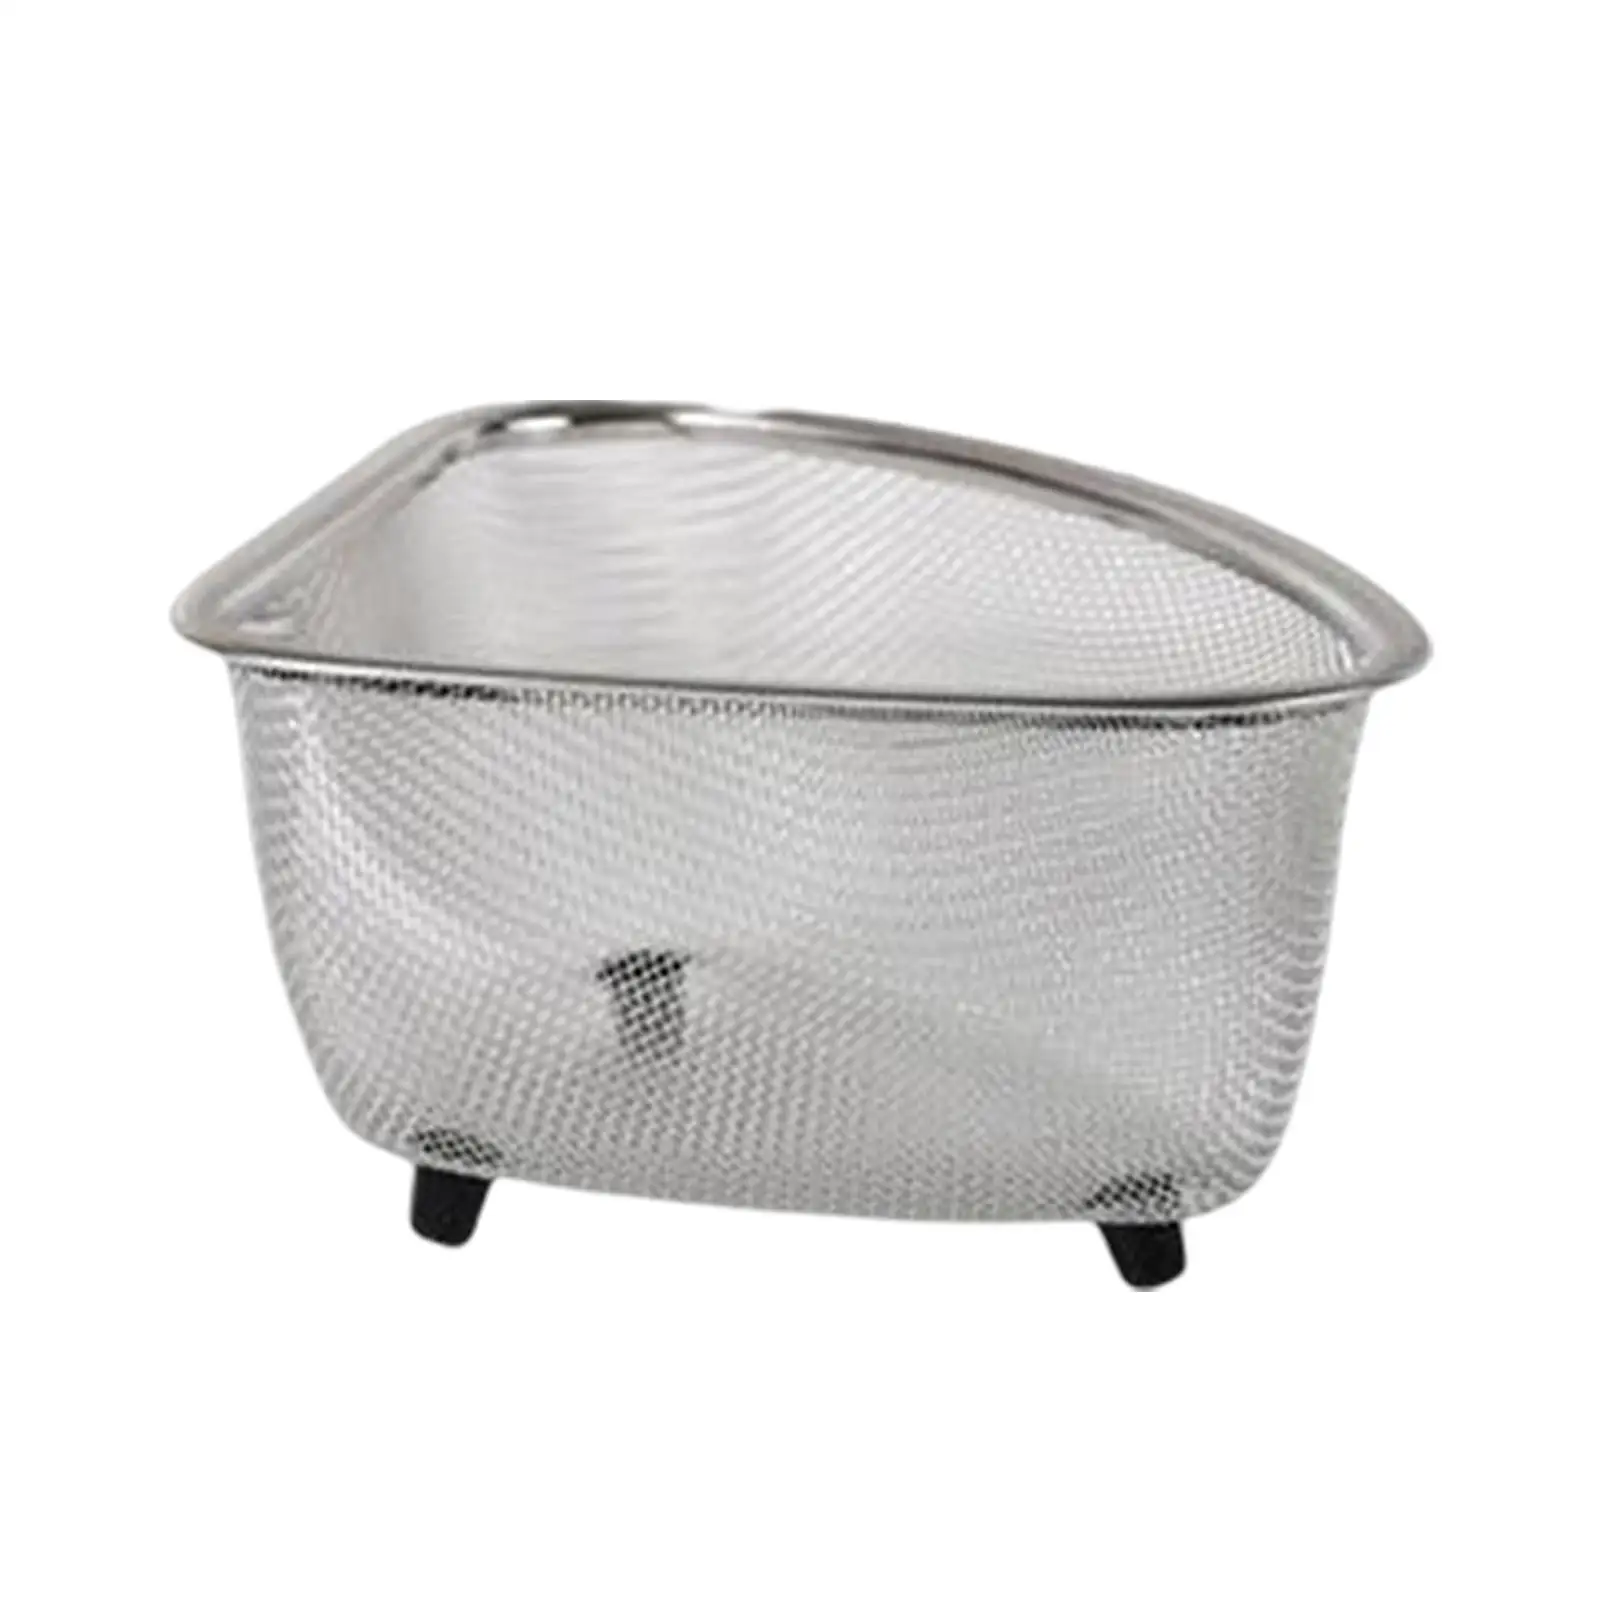 Practical Colander Triangle Strainer Durable Drain Basket Reusable Sink Drain Dish Rack for Cook Vegetable Fruits Pasta Basket